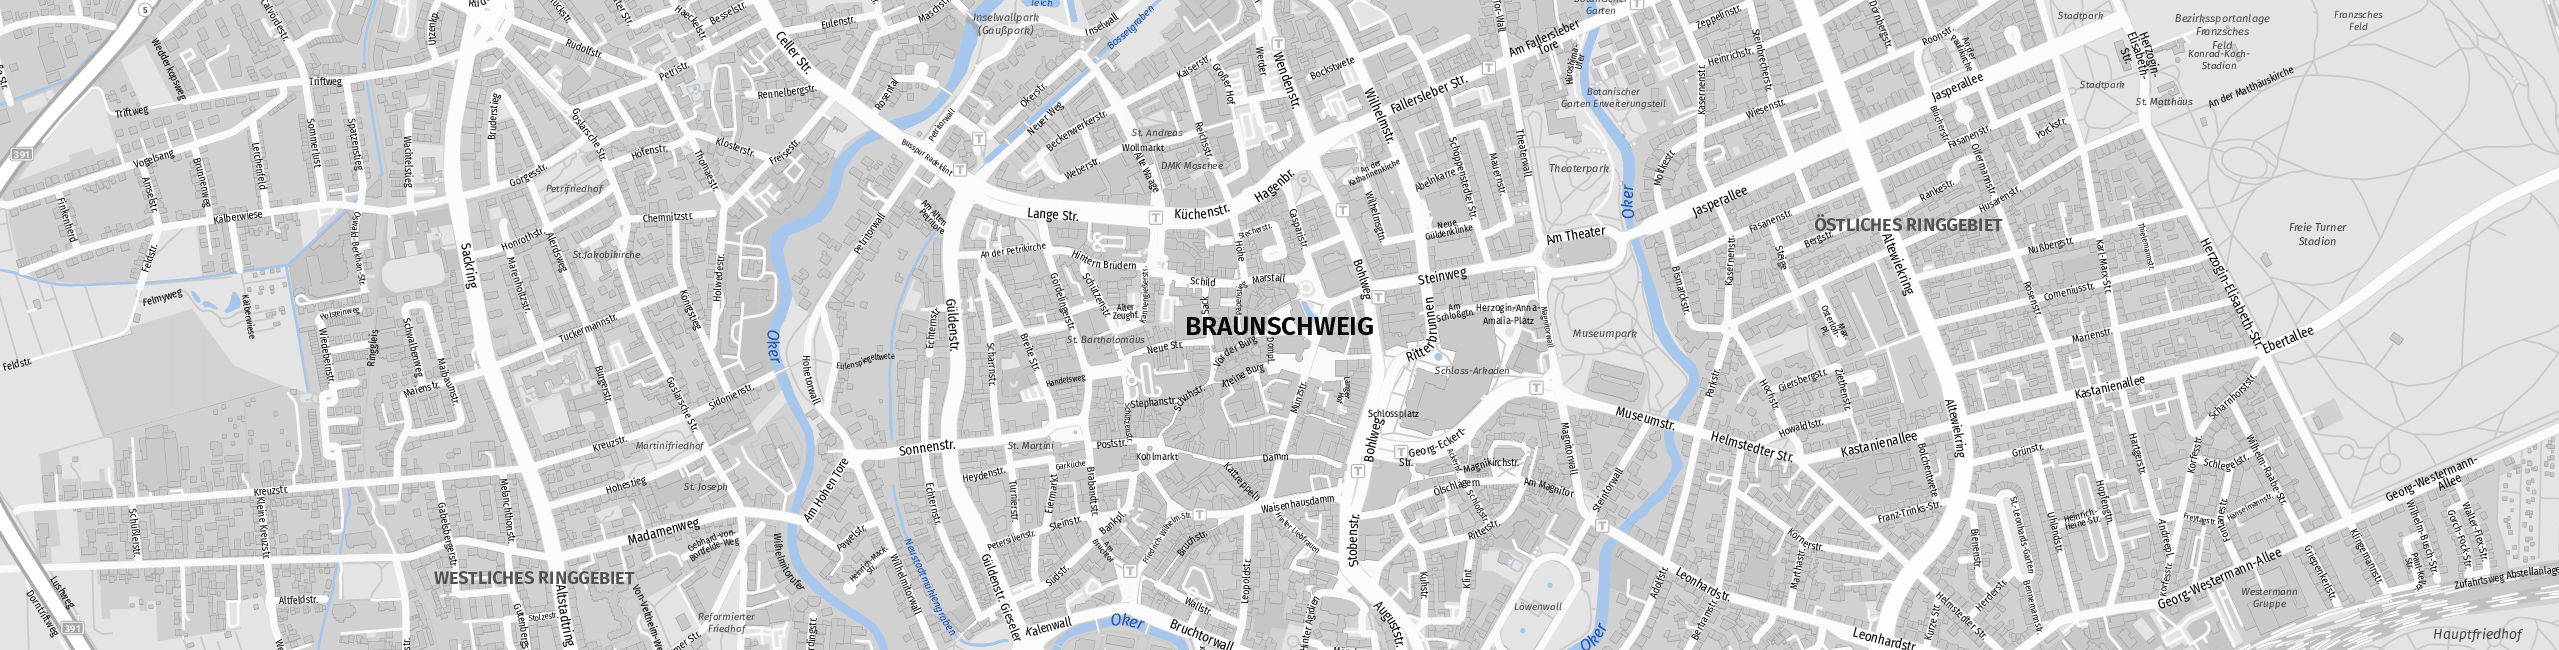 Stadtplan Brunswick zum Downloaden.